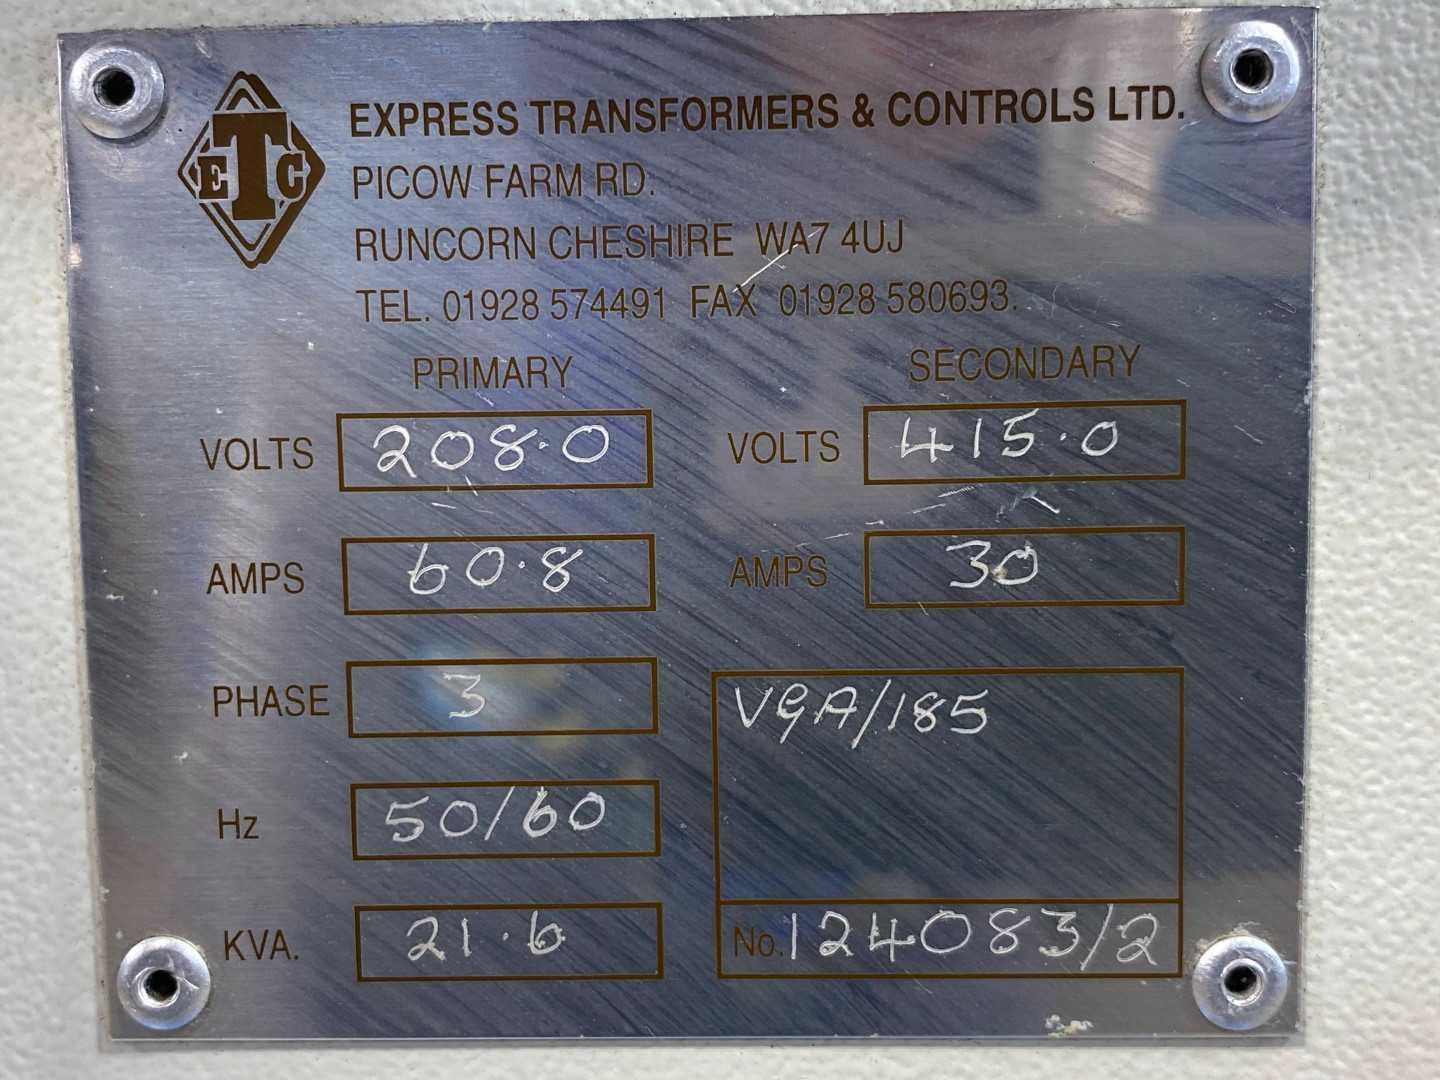 21/20 KVA 208/440 Express Transformer & Controllers VGA/185 